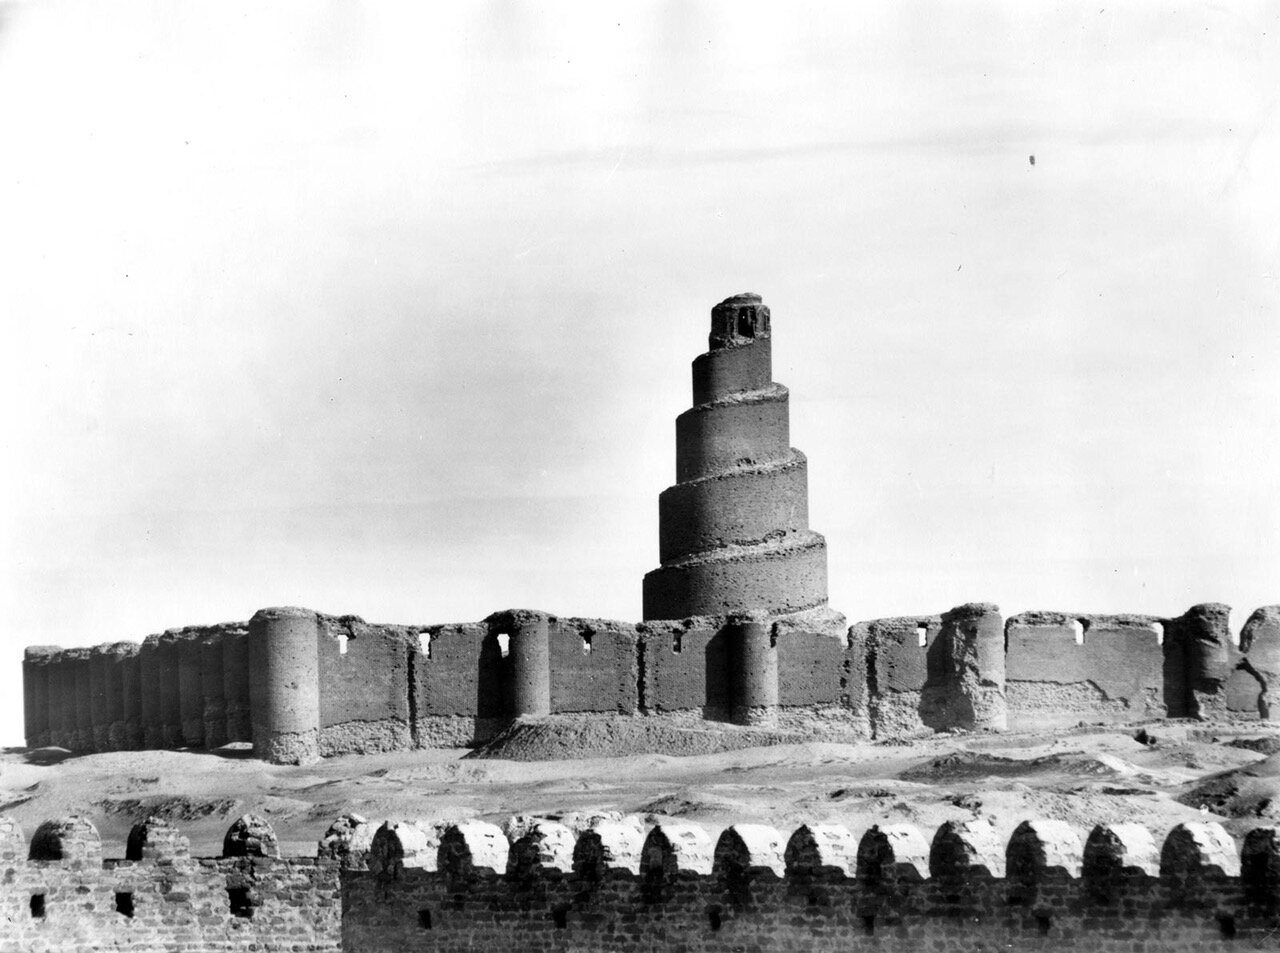  Minaret of the Great Mosque of Samarra, Baghdad 